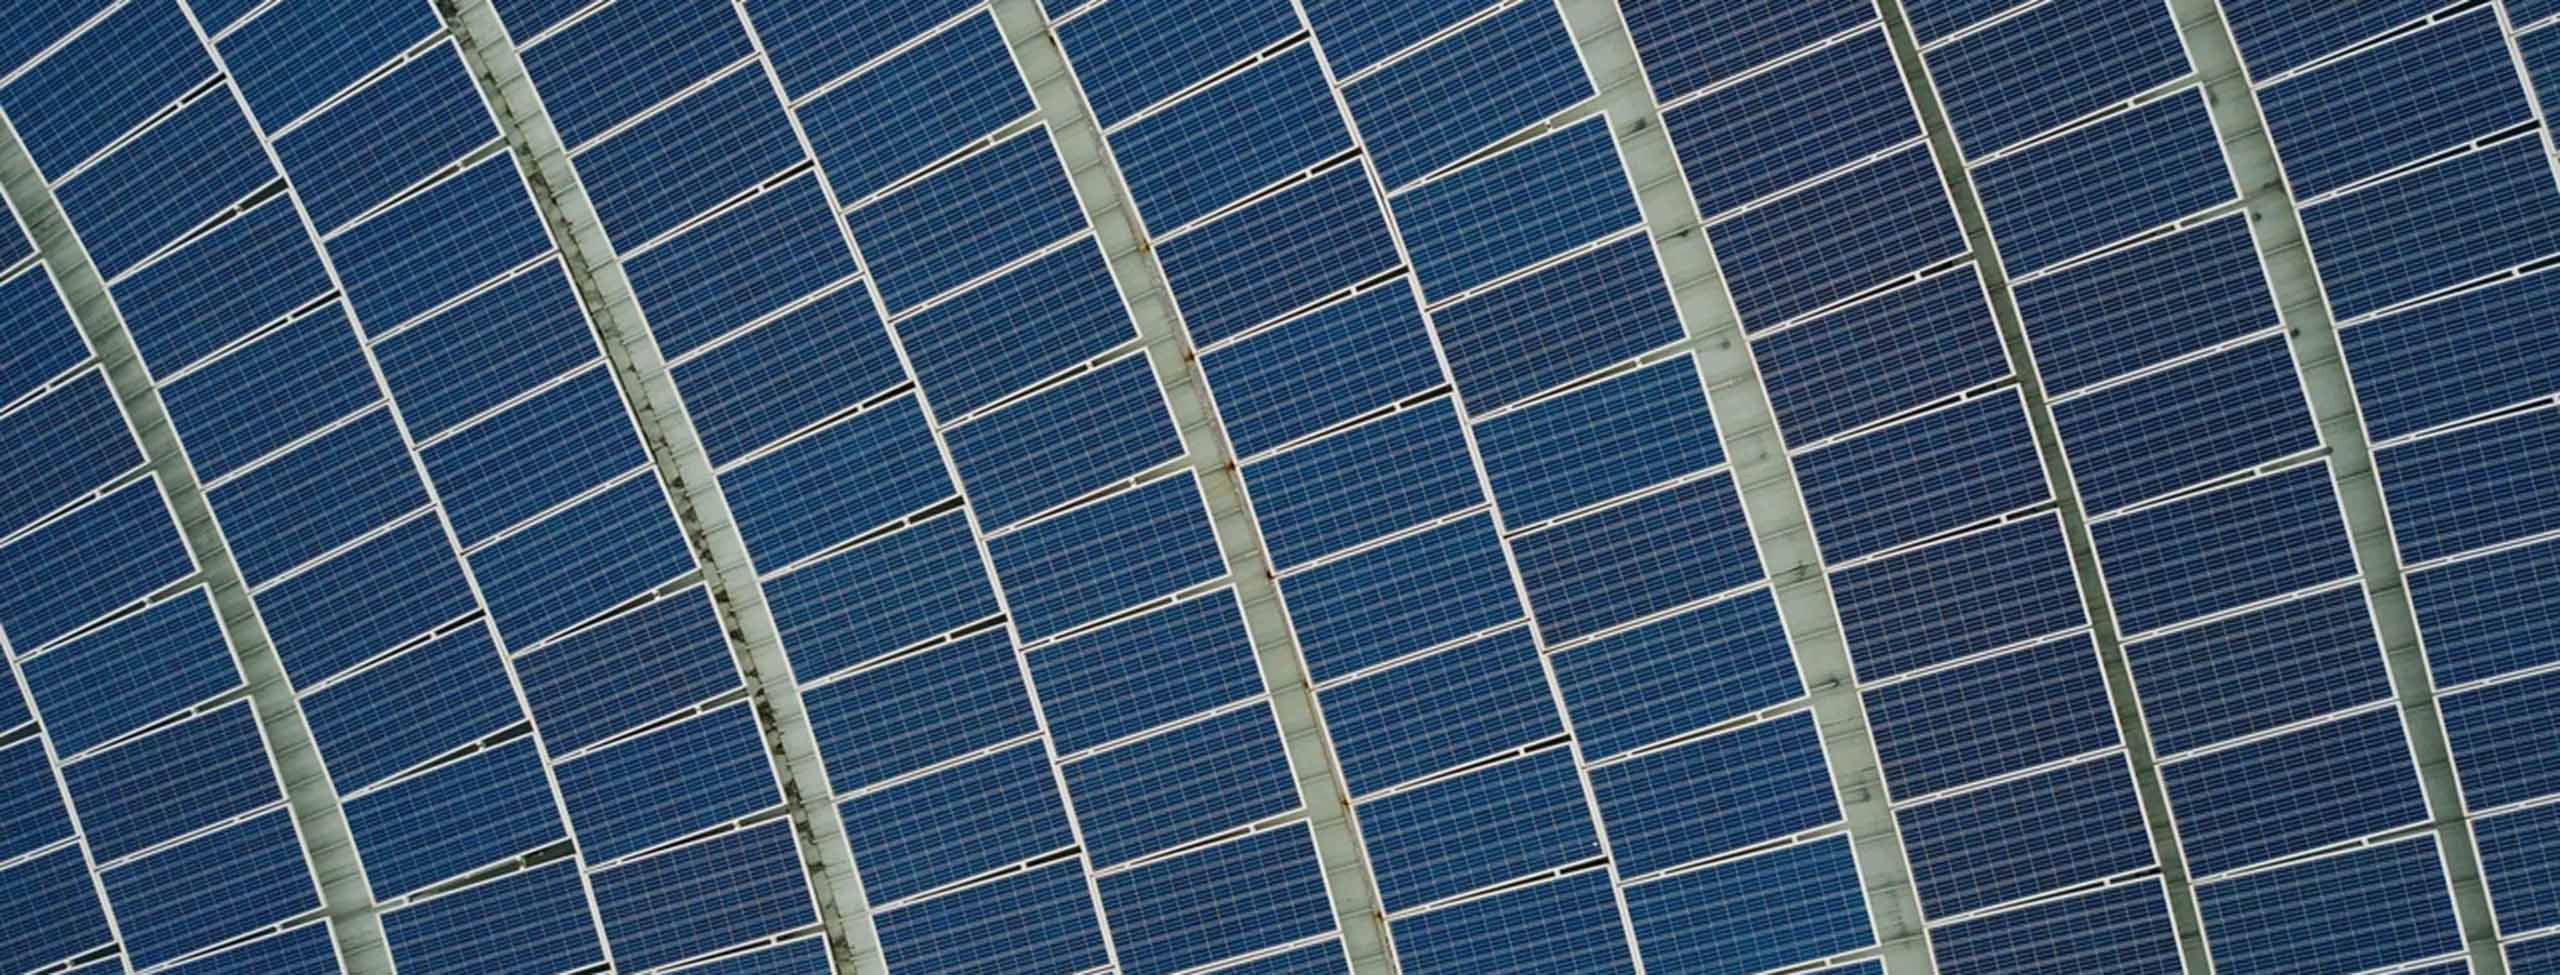 aerial view of solar farm